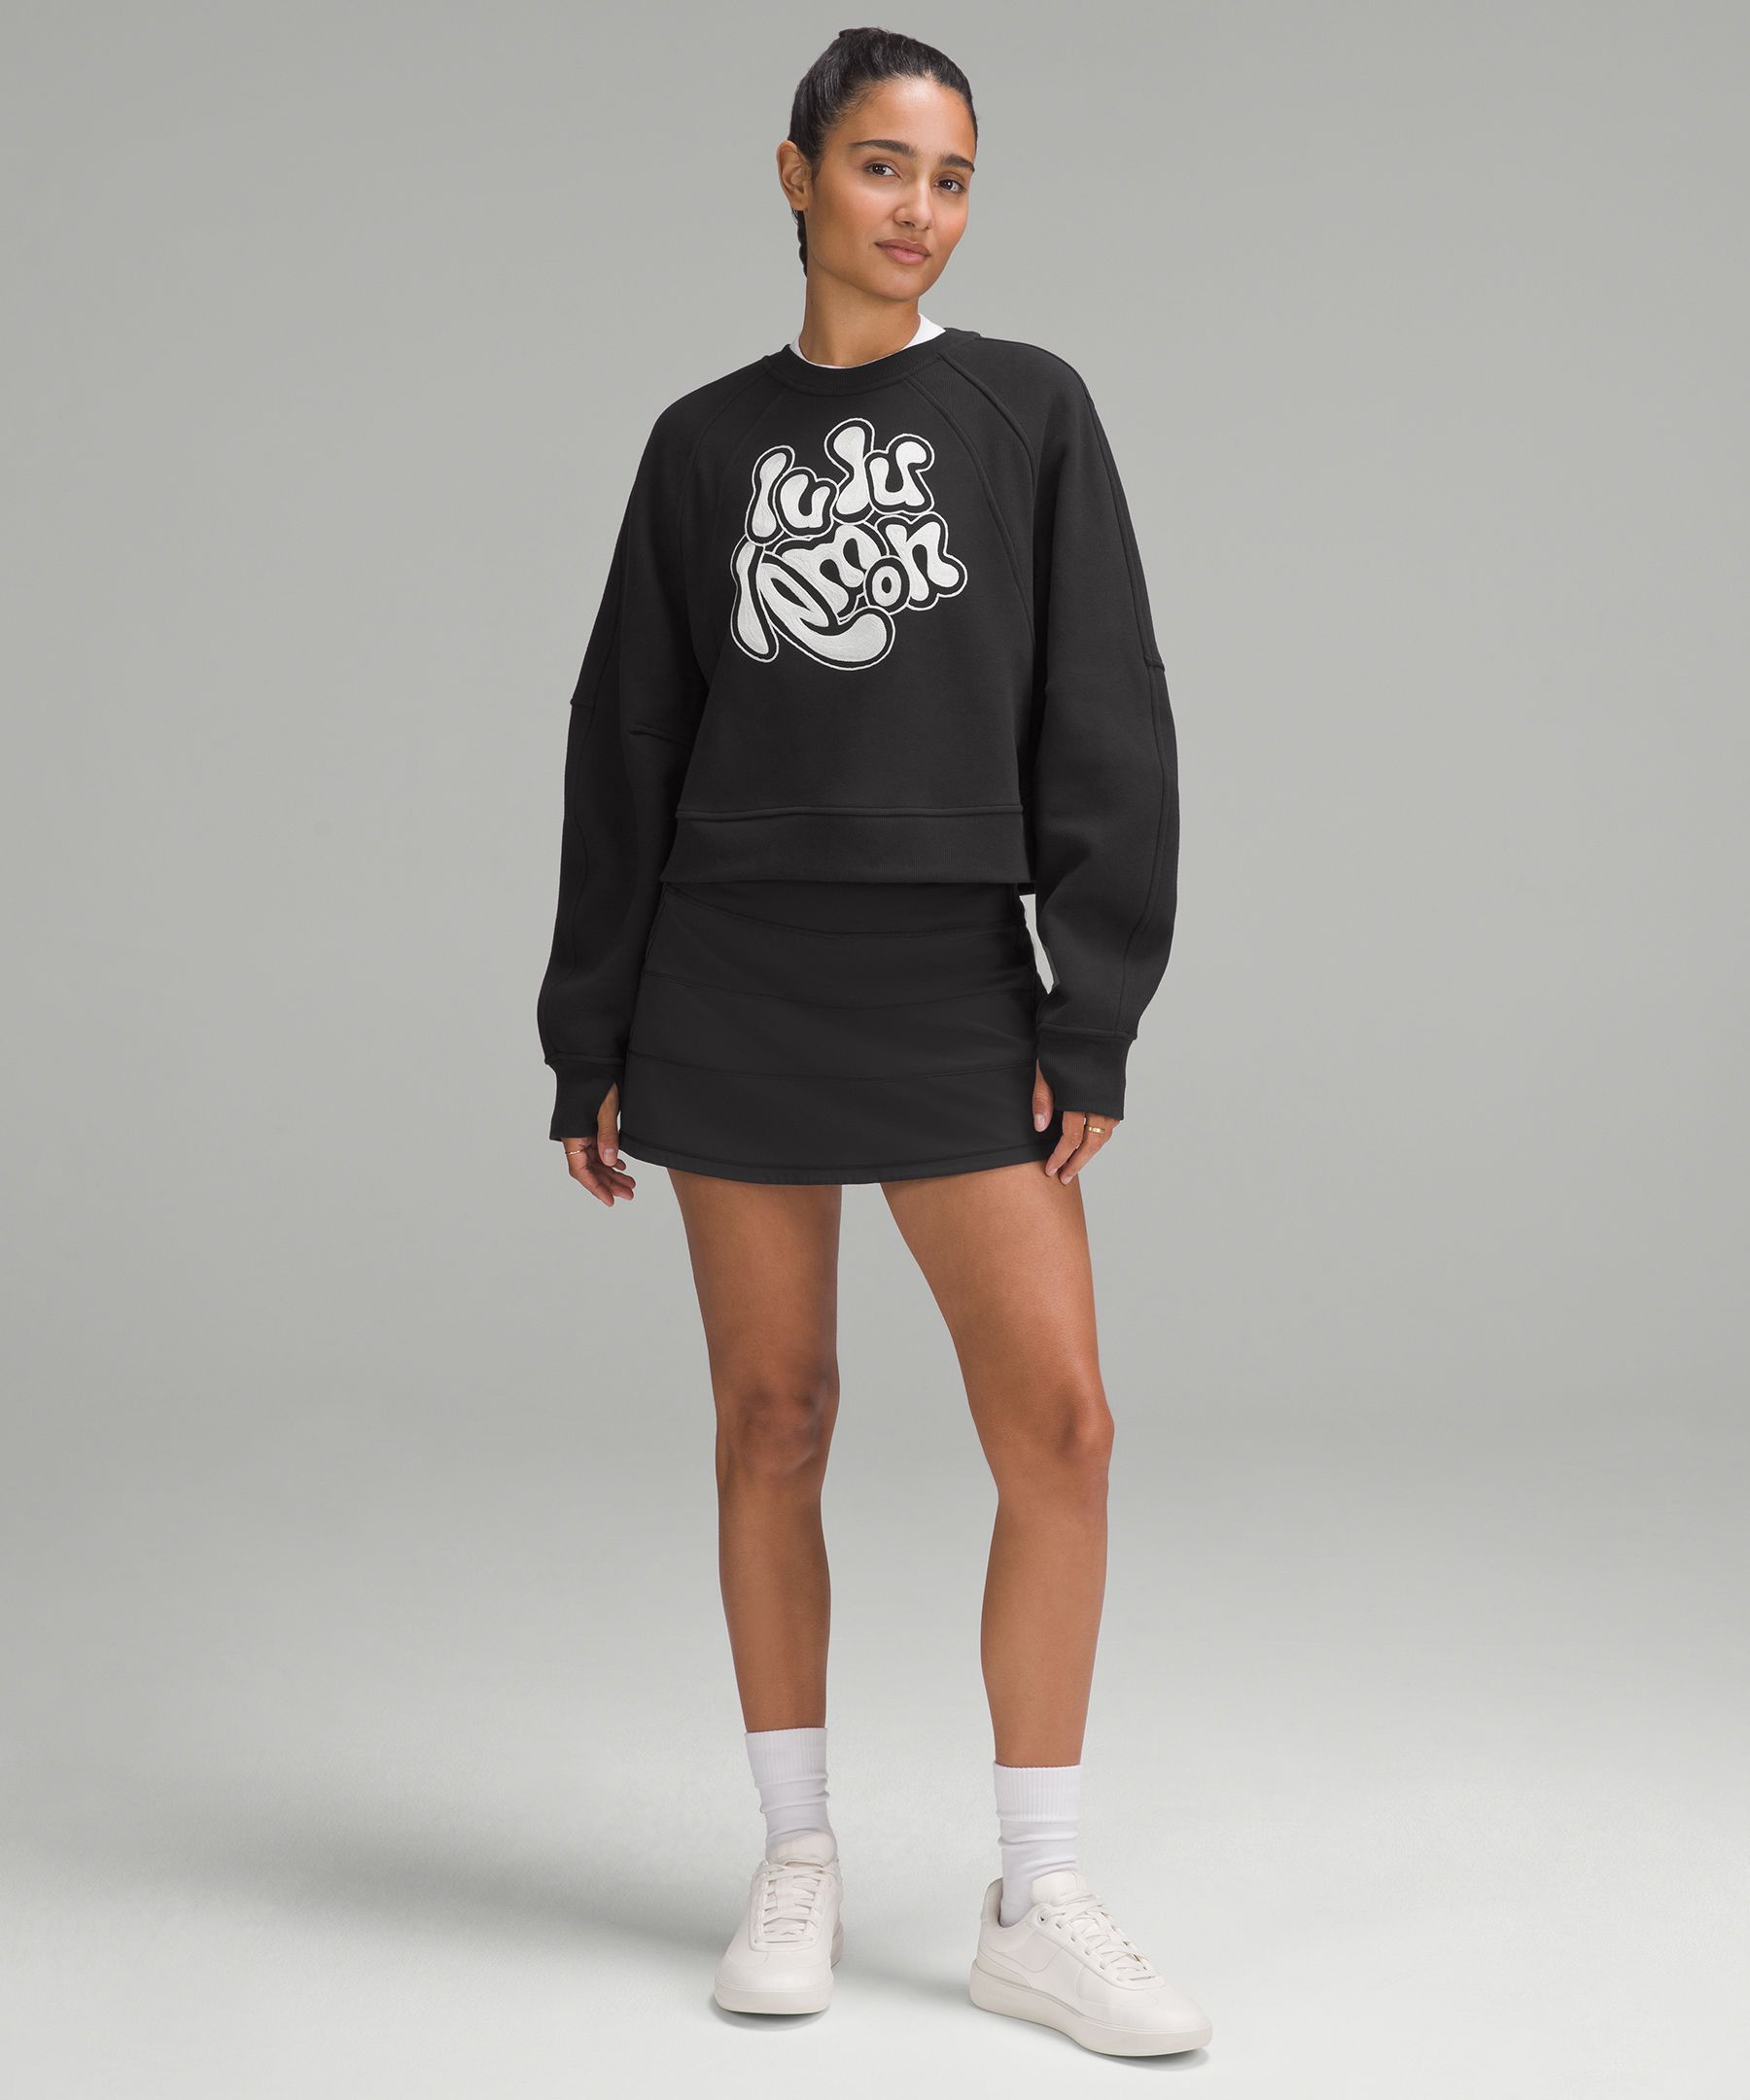 Scuba Oversized Pullover *Embroidered | Women's Hoodies & Sweatshirts